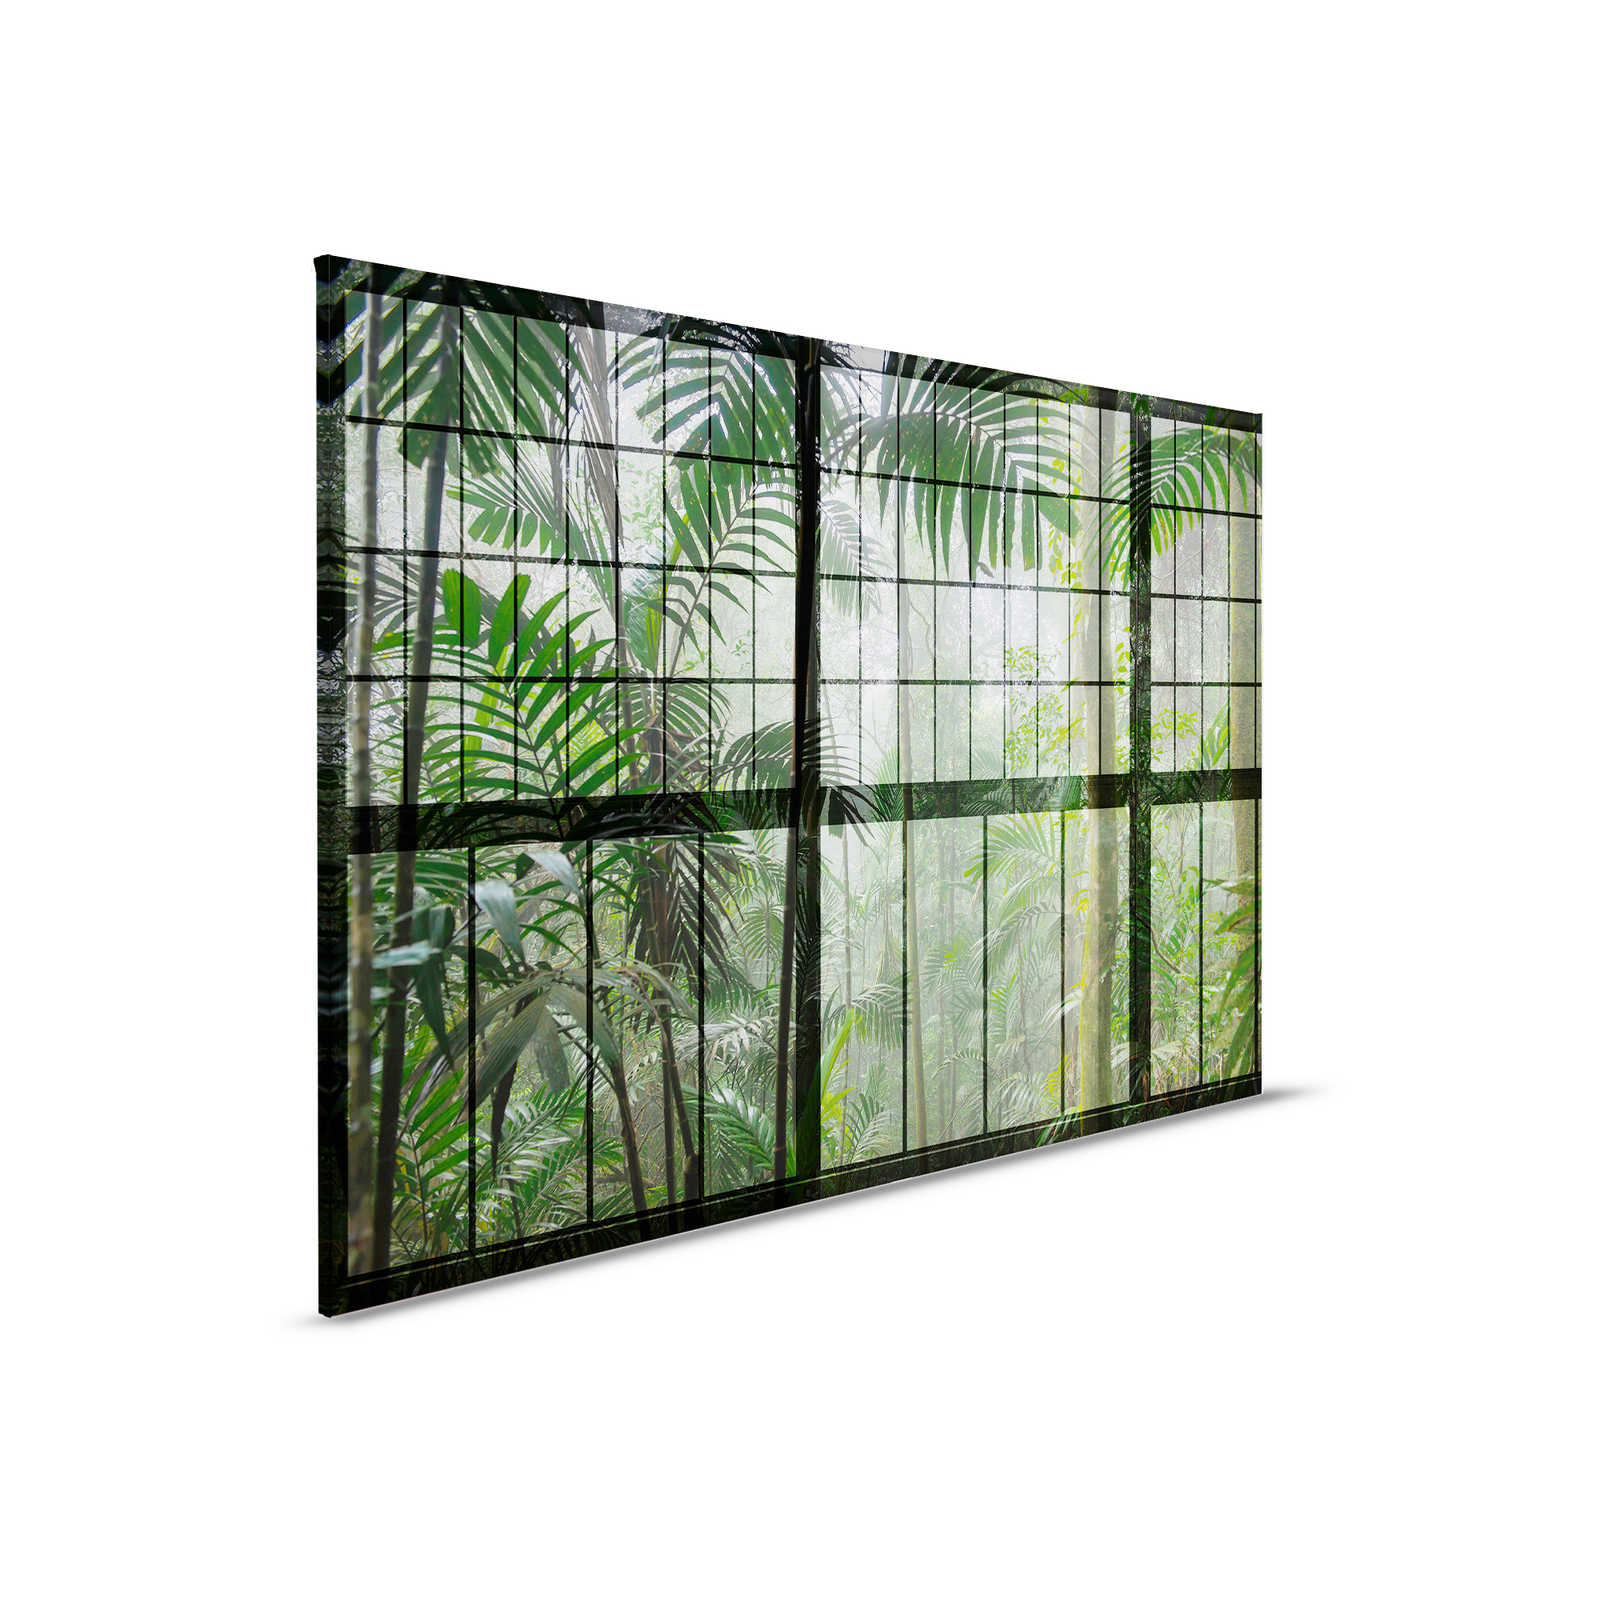         Rainforest 1 - Loft window canvas painting with jungle view - 0.90 m x 0.60 m
    